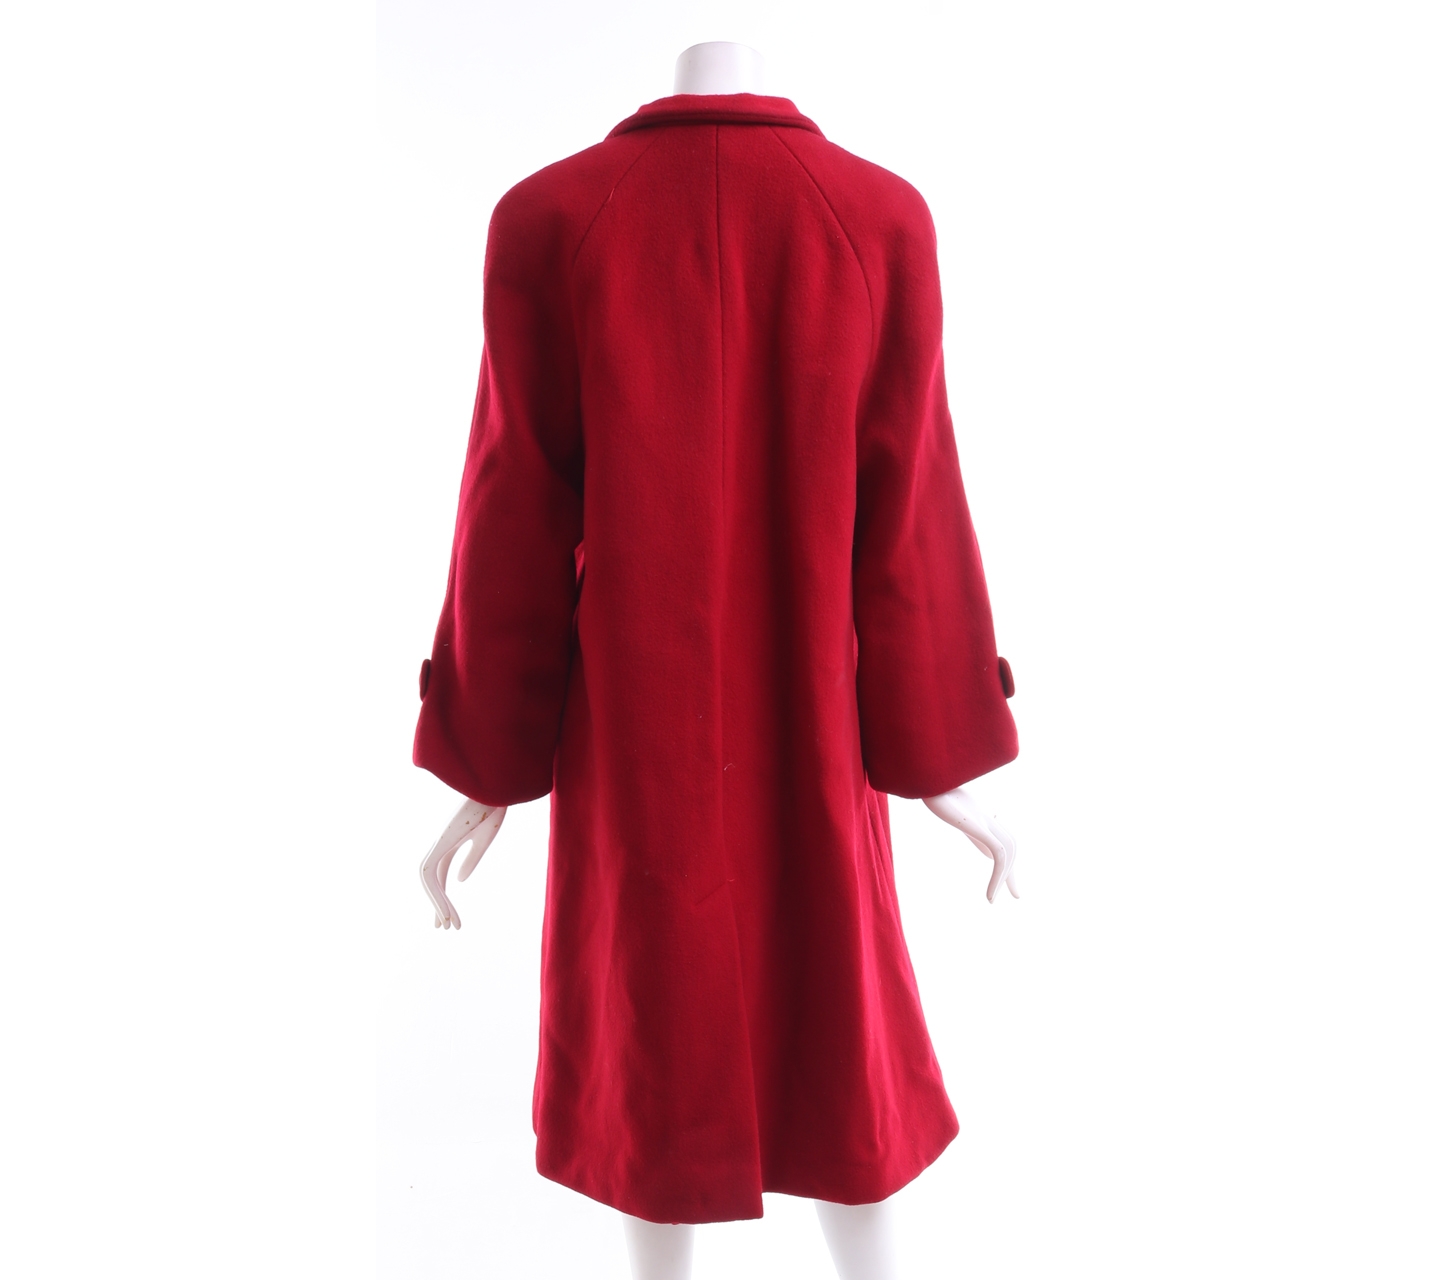 Perry Ellis Red Coat